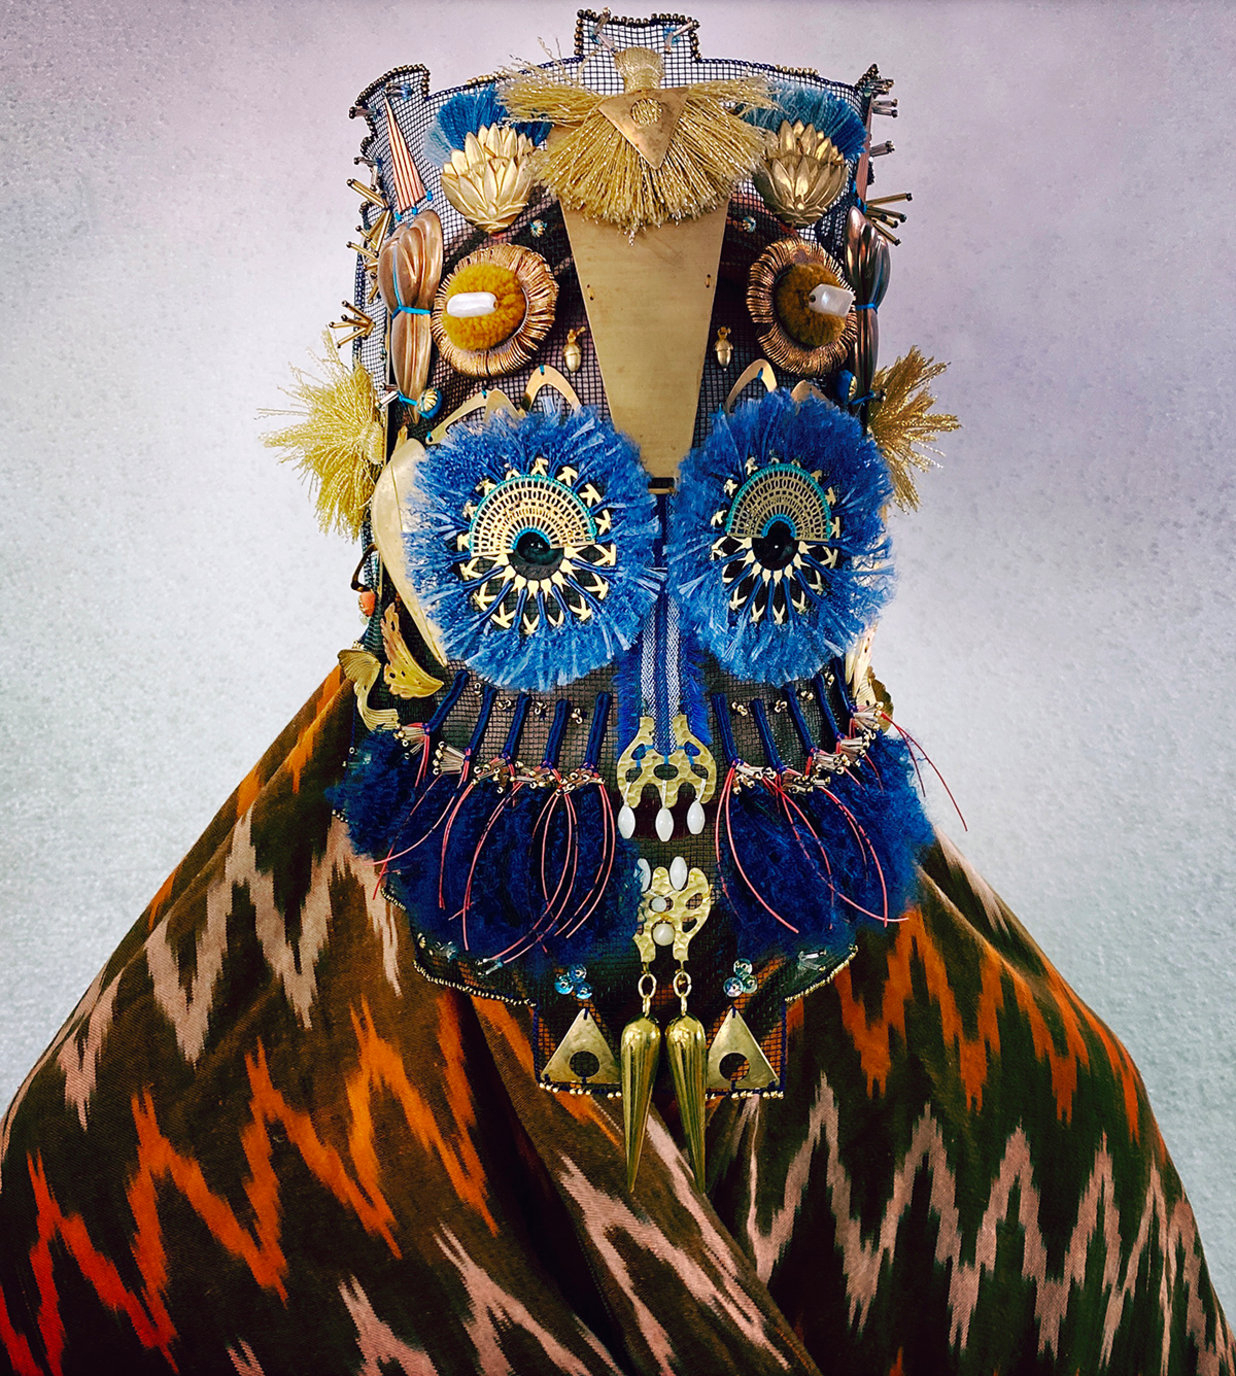 Mask artwork by Damselfrau | © Damselfrau